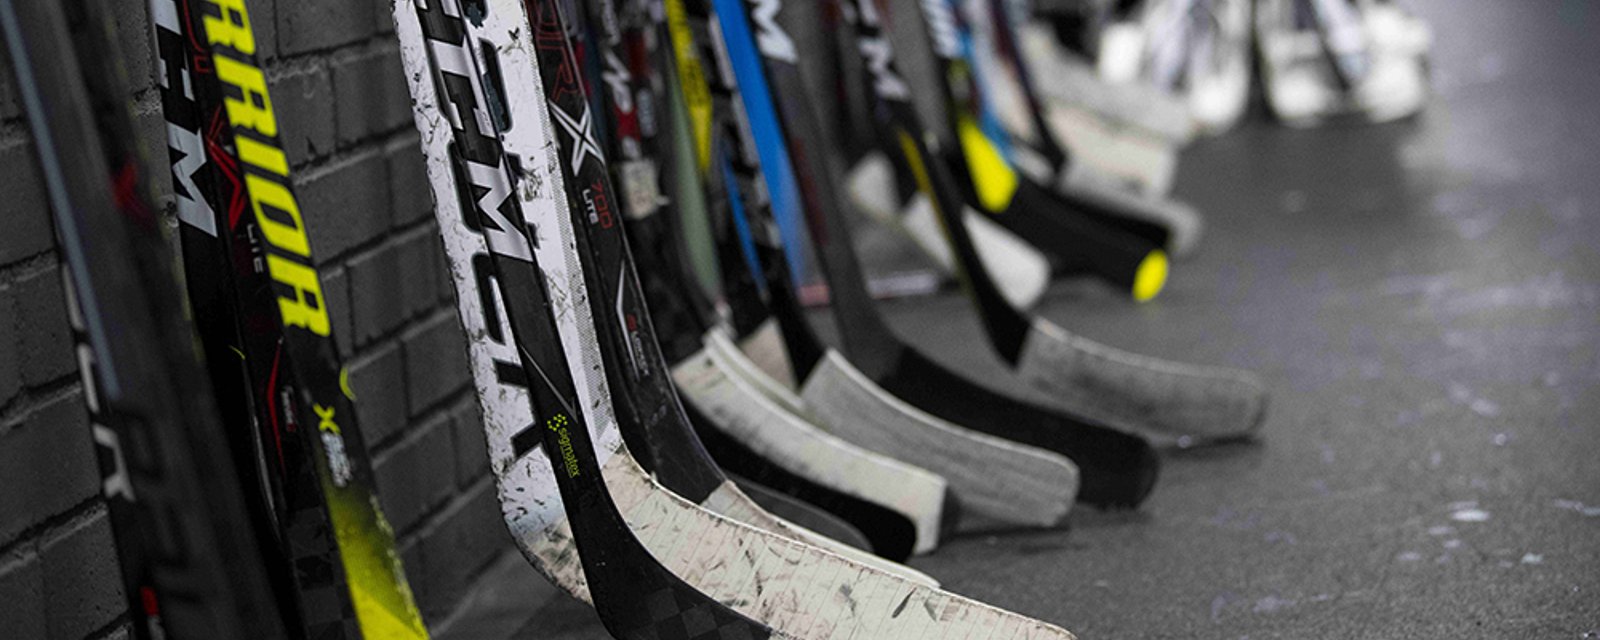 NHL team schedules May 15 training camp ahead of season restart